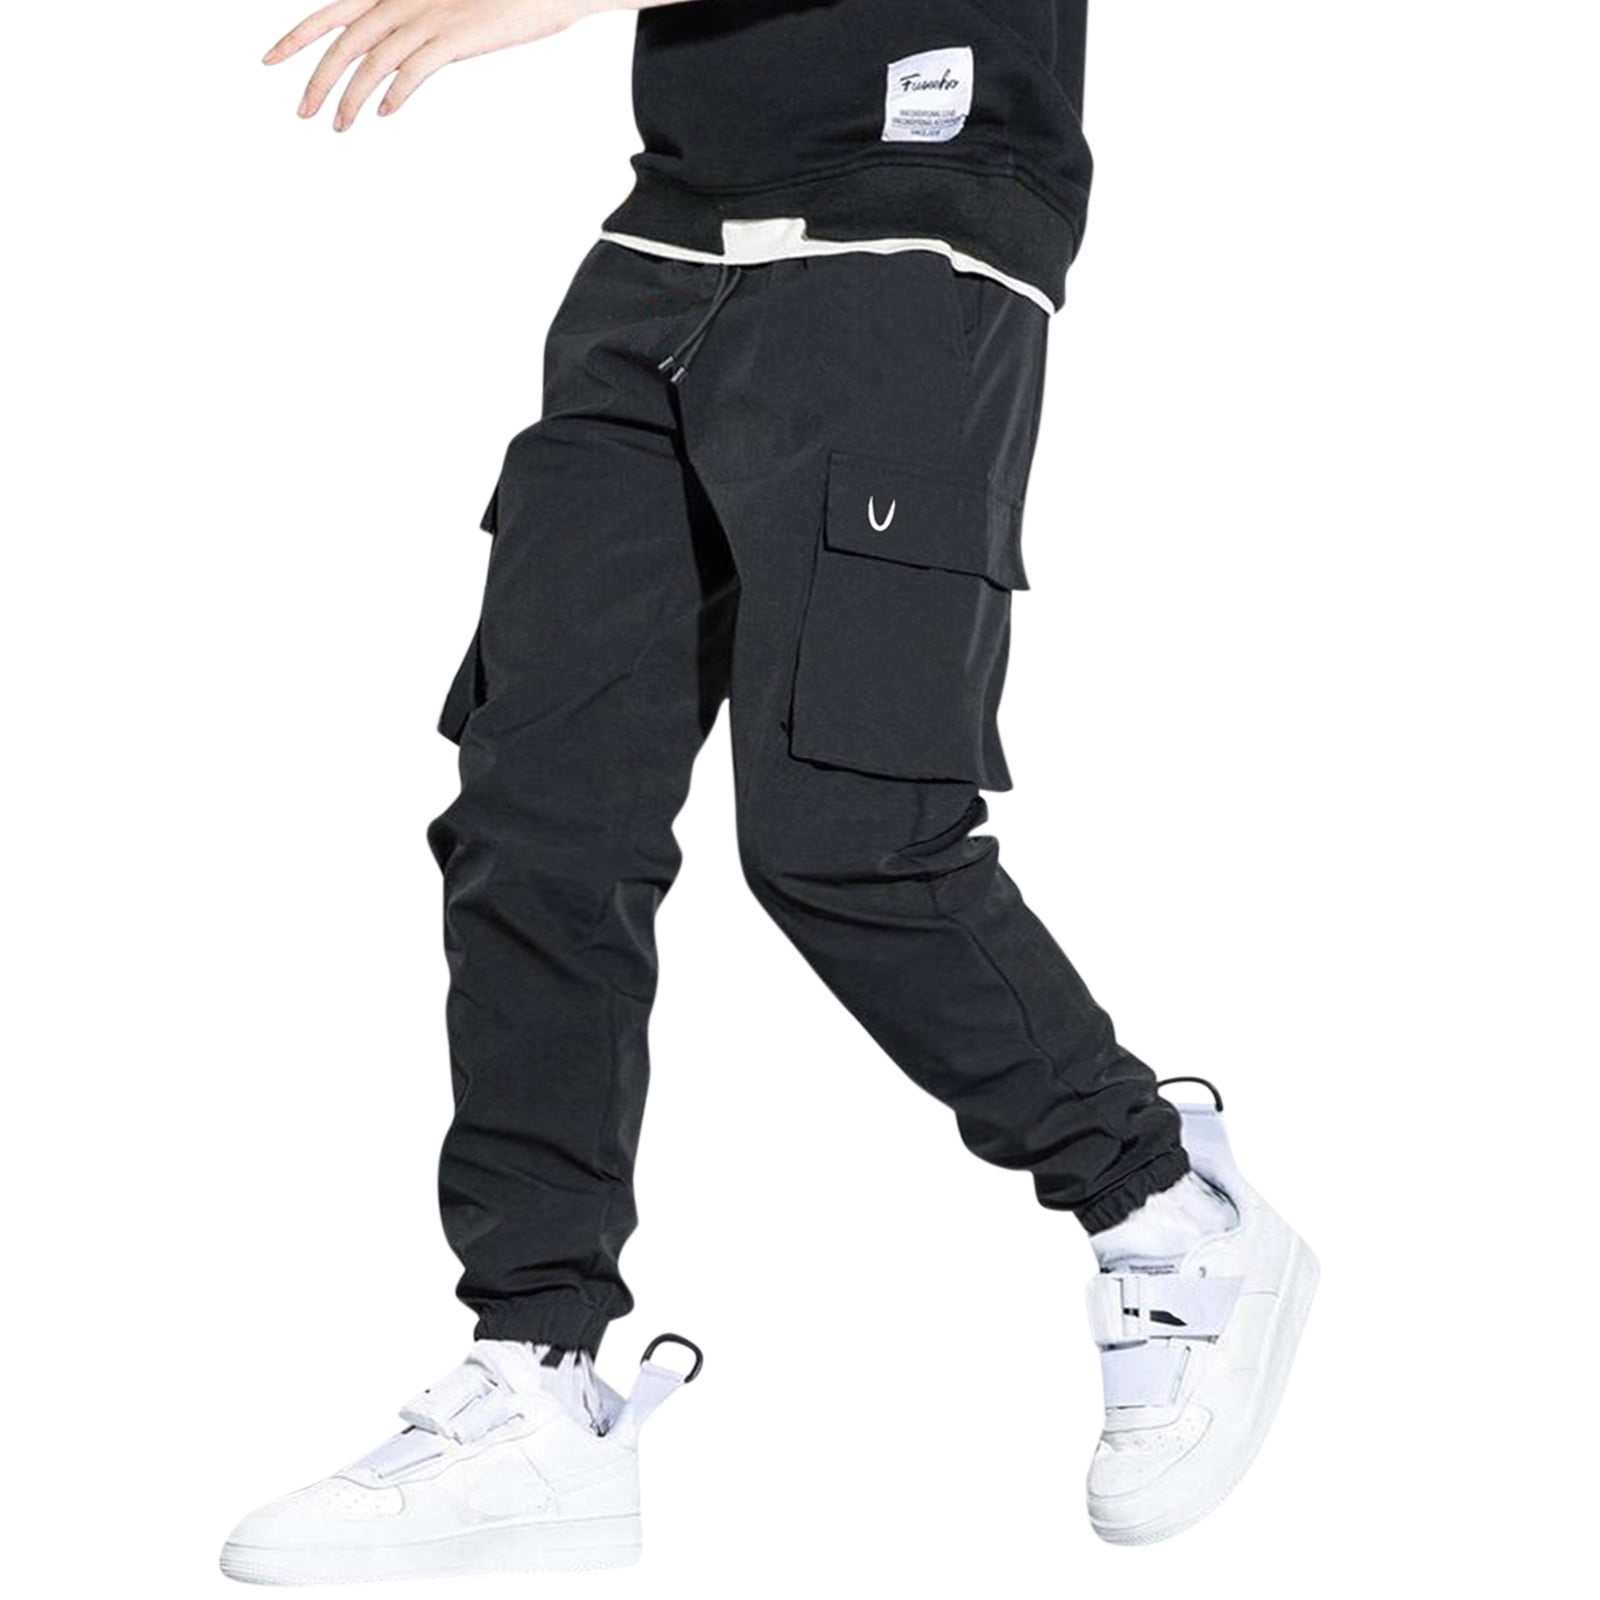 KaLI_store Work Pants for Men Menâ€˜s Joggers Sweatpants - Fashion Cargo  Pants Gym Track Pants Slim Comfortable Trousers Black,L - Walmart.com